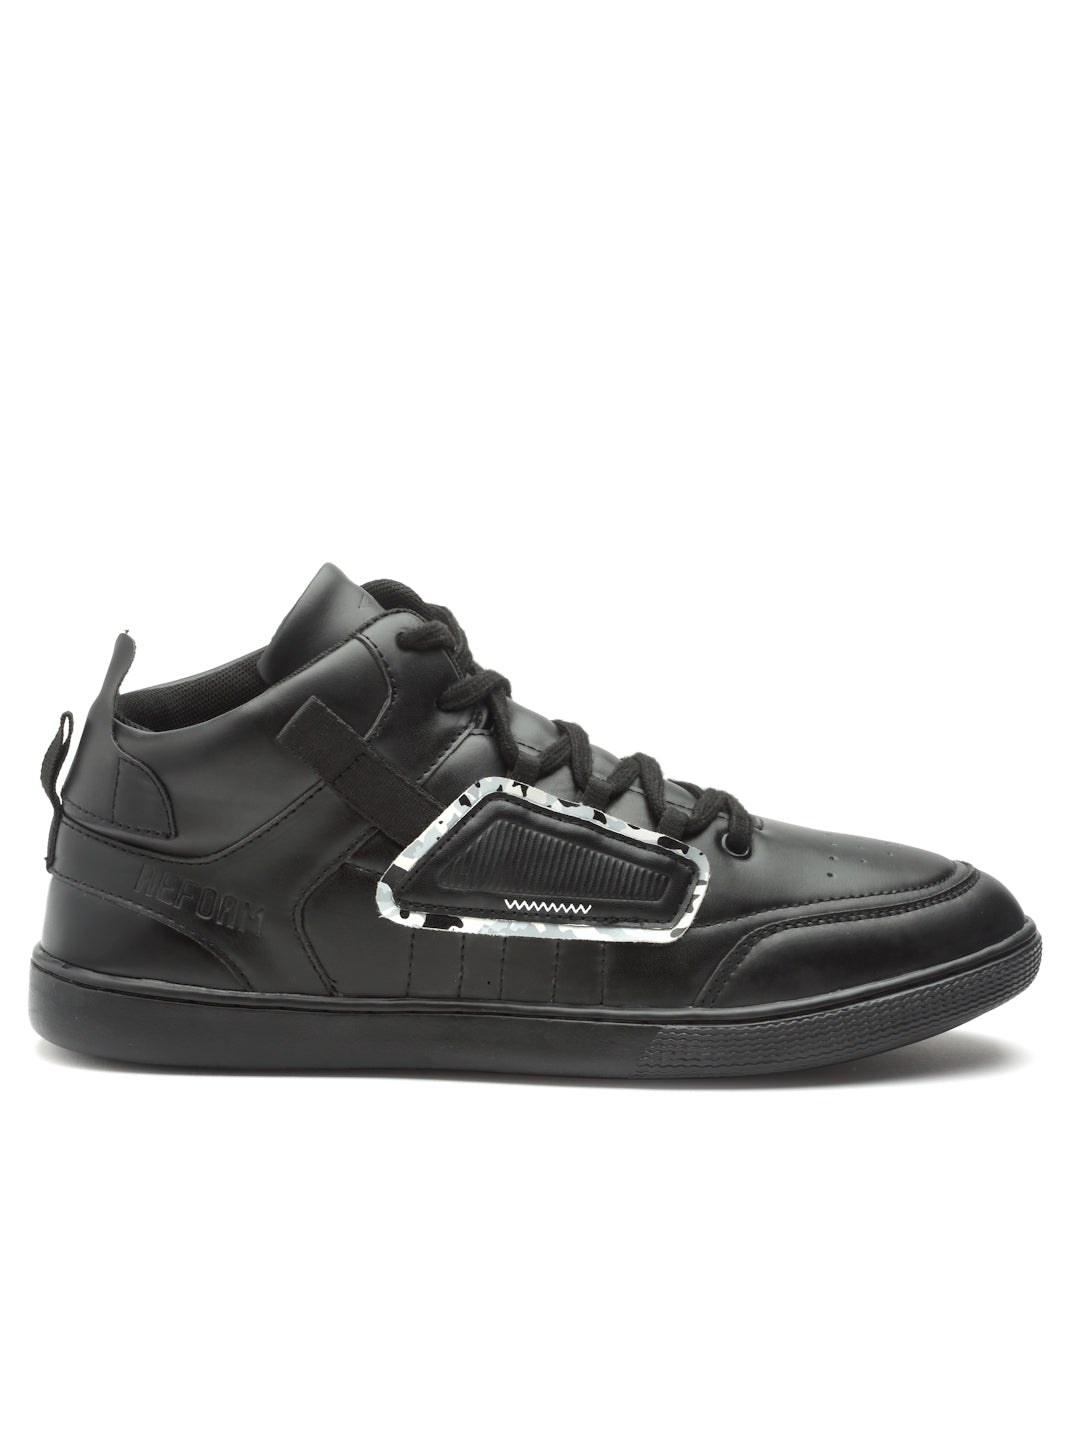 Black Casual Shoes for Men | Canvas Rubber Sole Shoes | Bacca Bucci